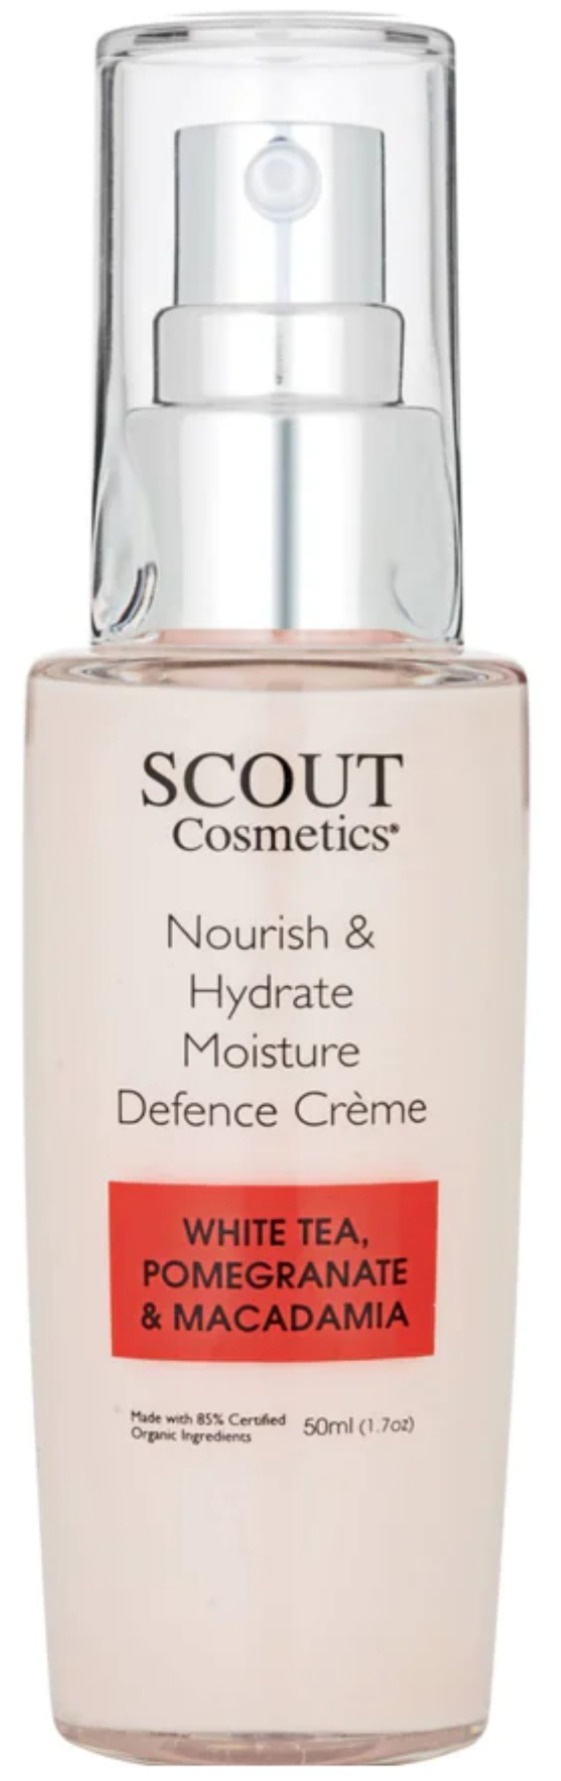 SCOUT Cosmetics Nourish & Hydrate Moisture Defence Crème